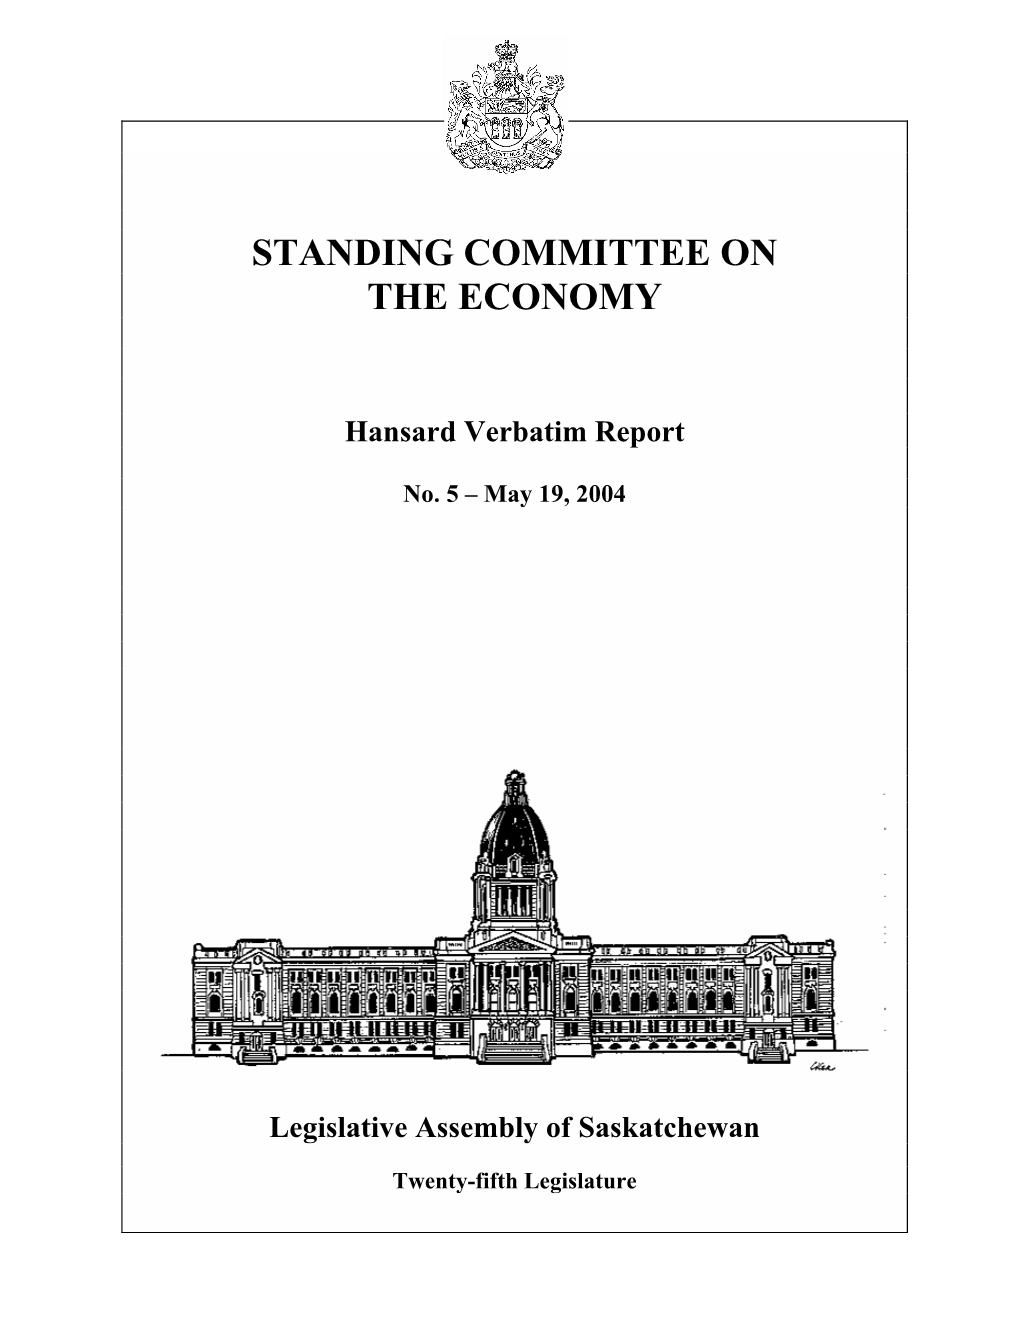 Hansard: May 19, 2004 (ECO)